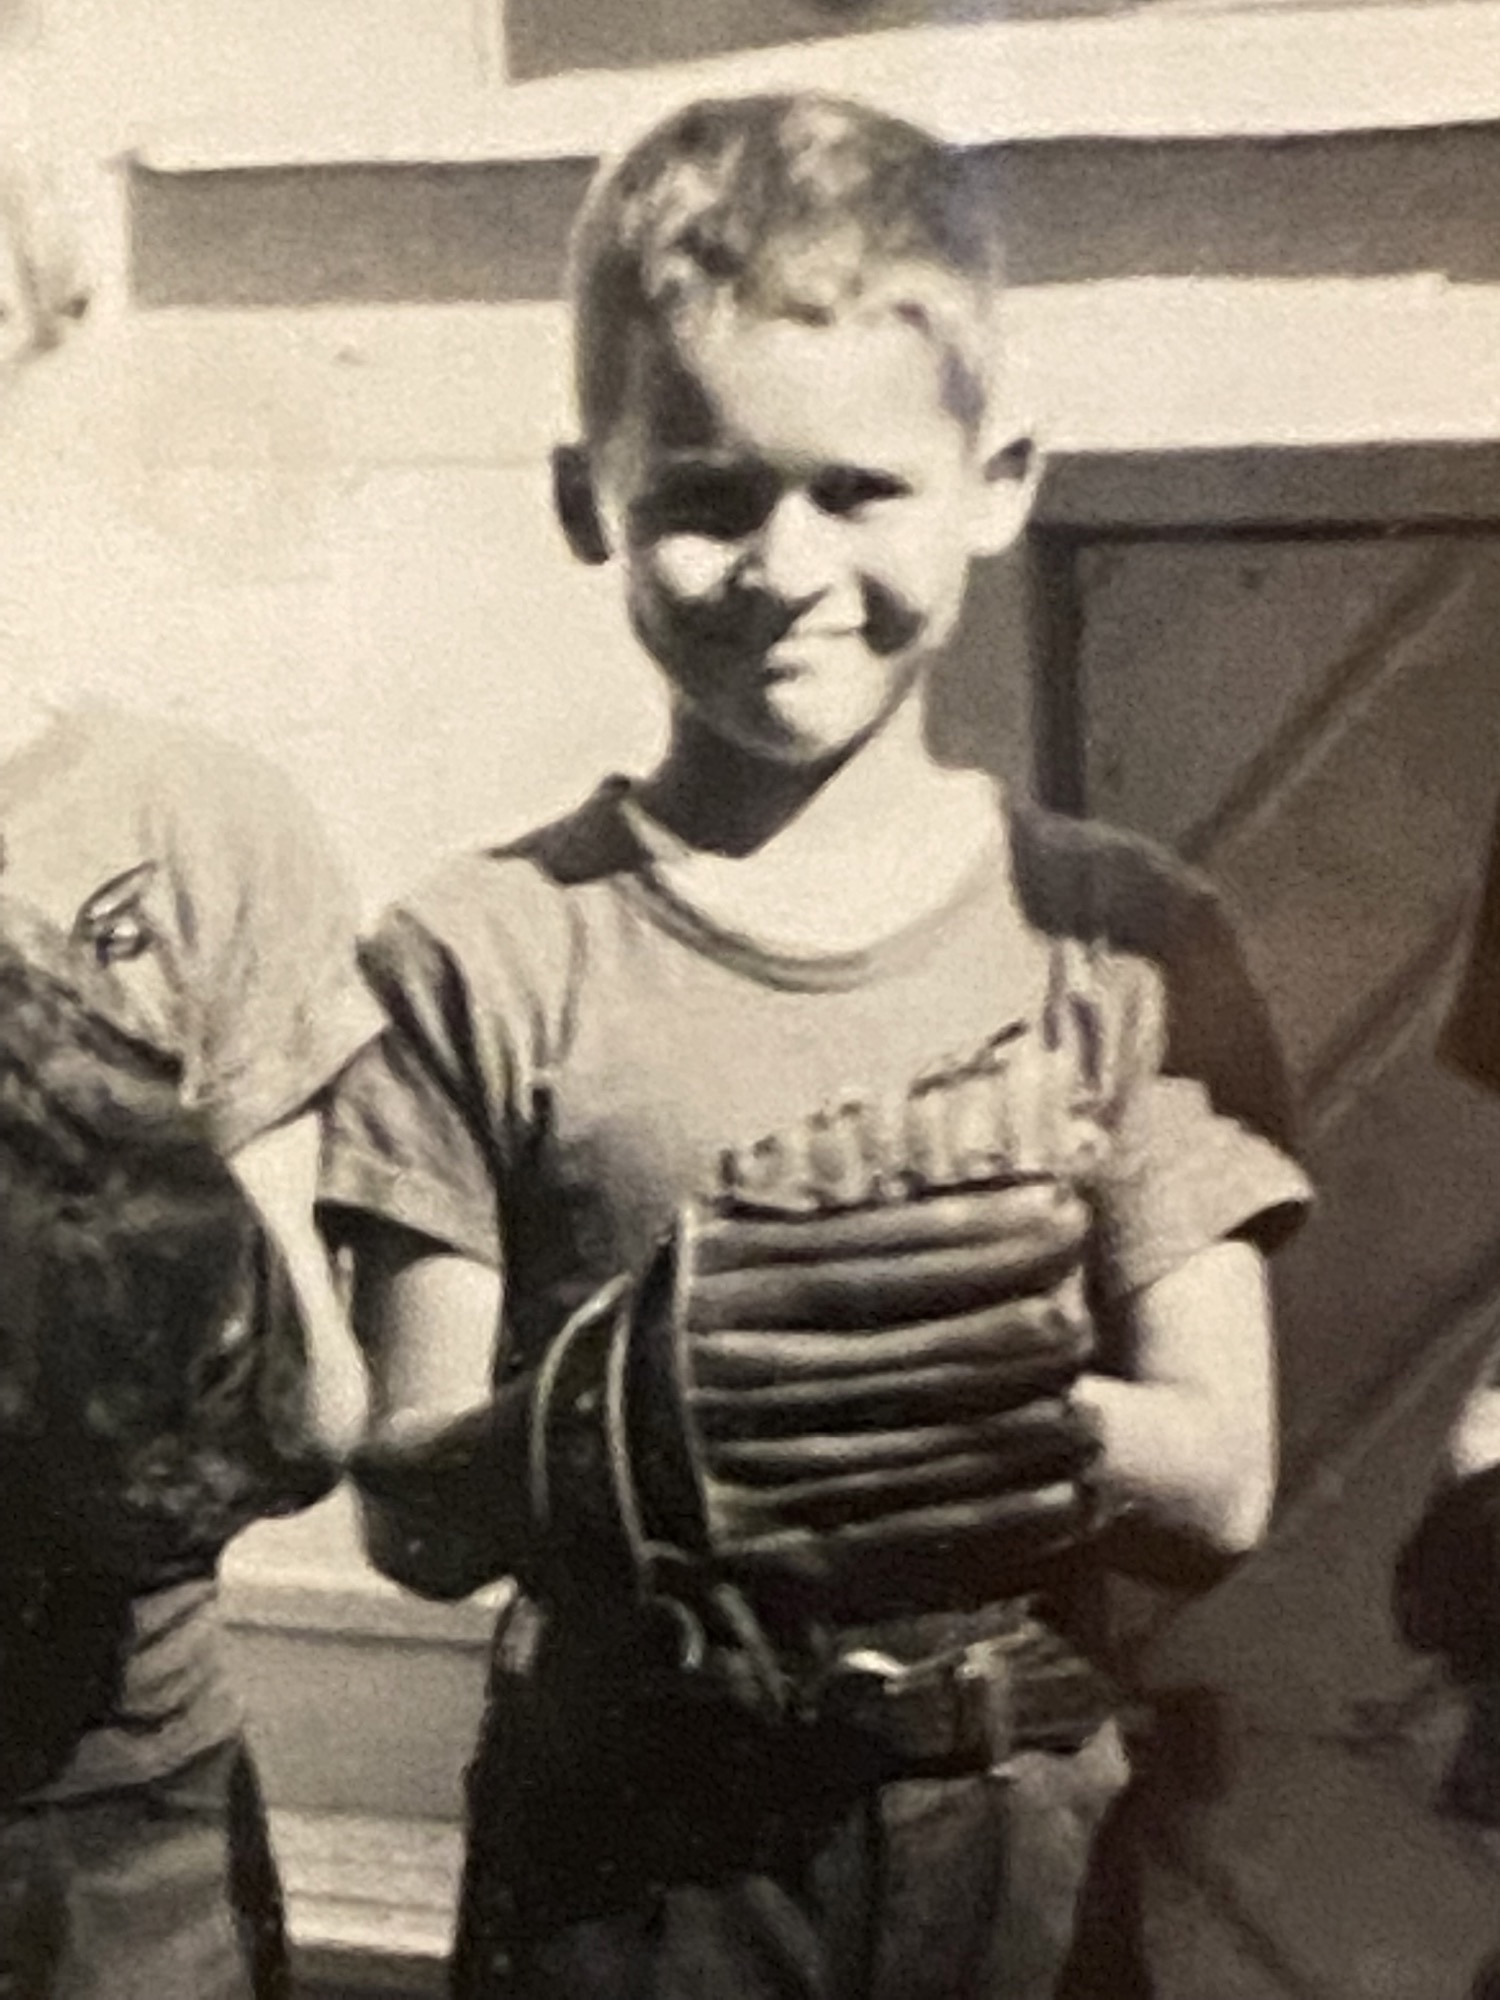 Gary with his baseball glove. Circa 1964. Courtesy Gary Horn